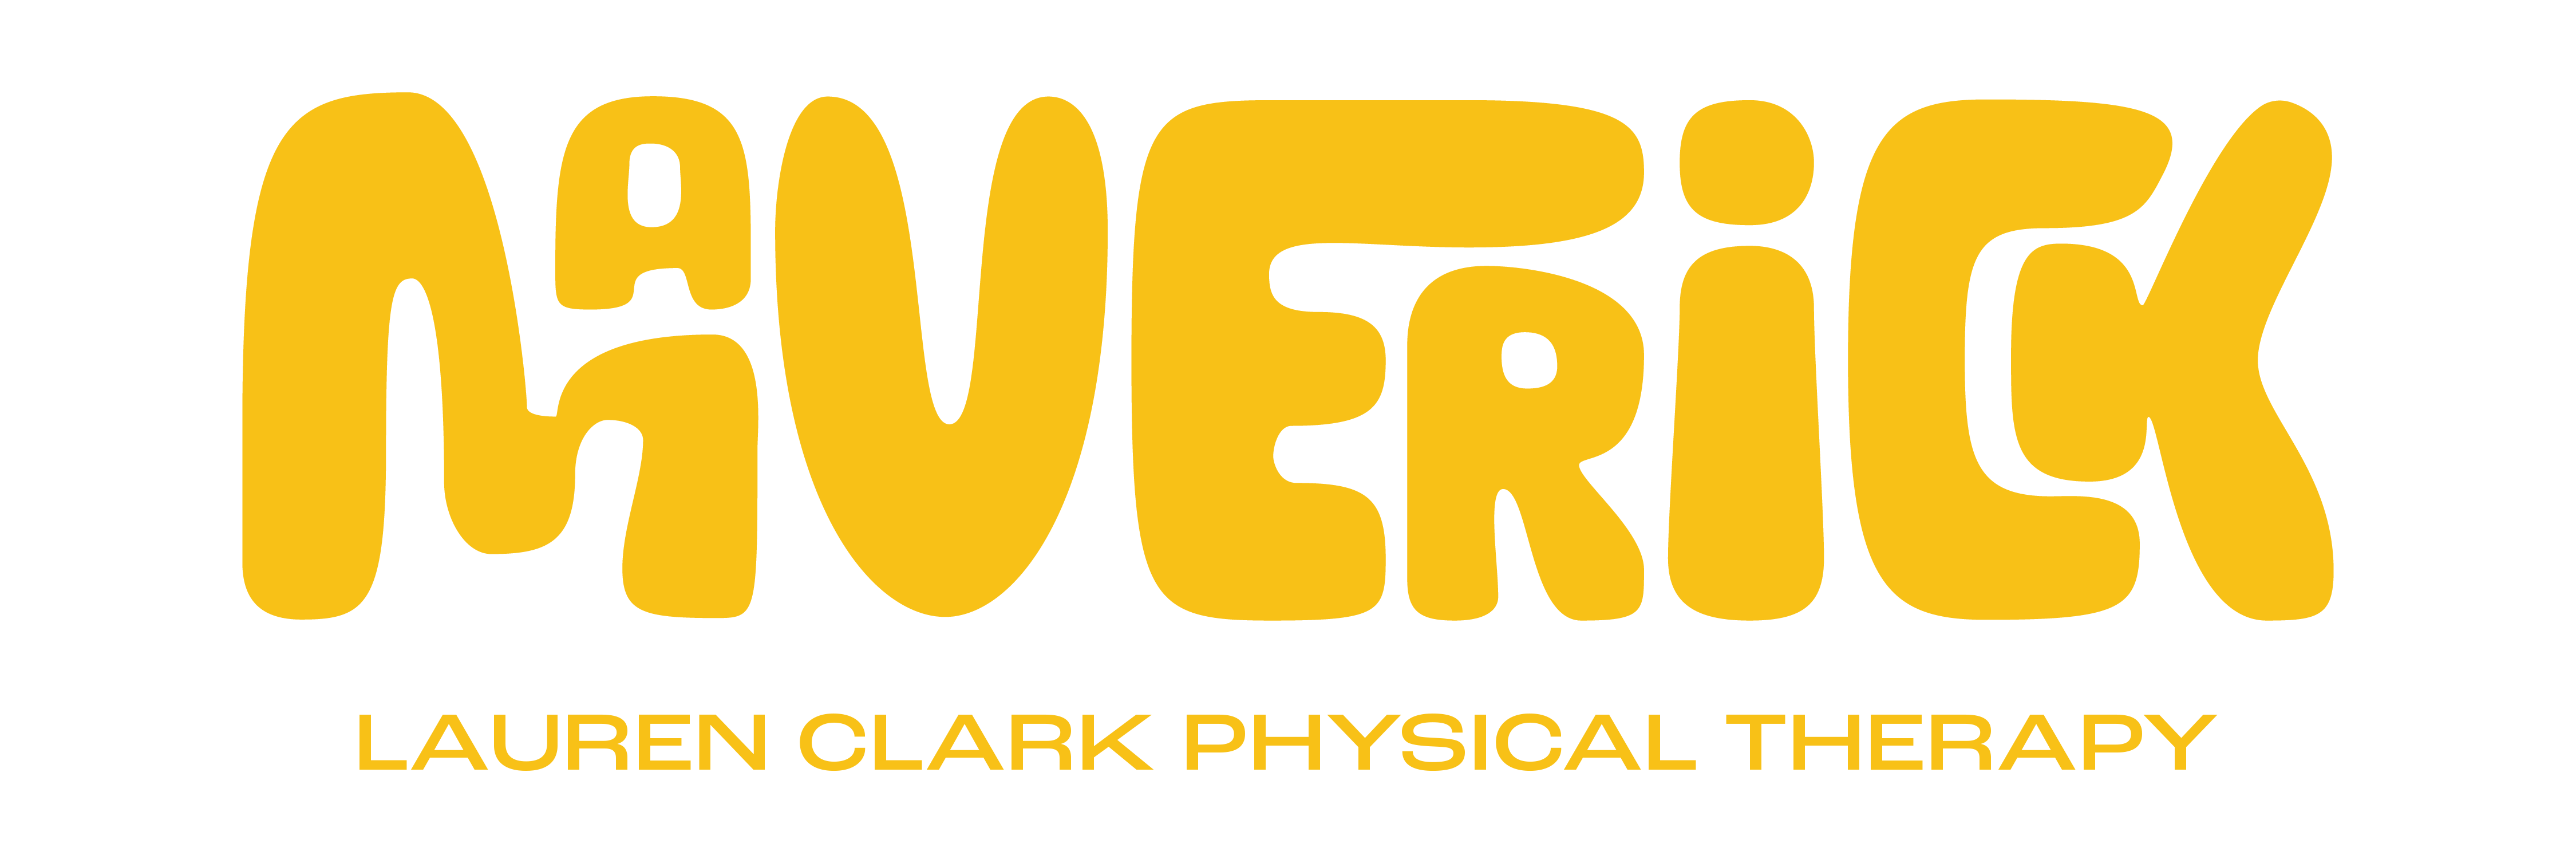 Maverick_LaurenClark_Logo_Header